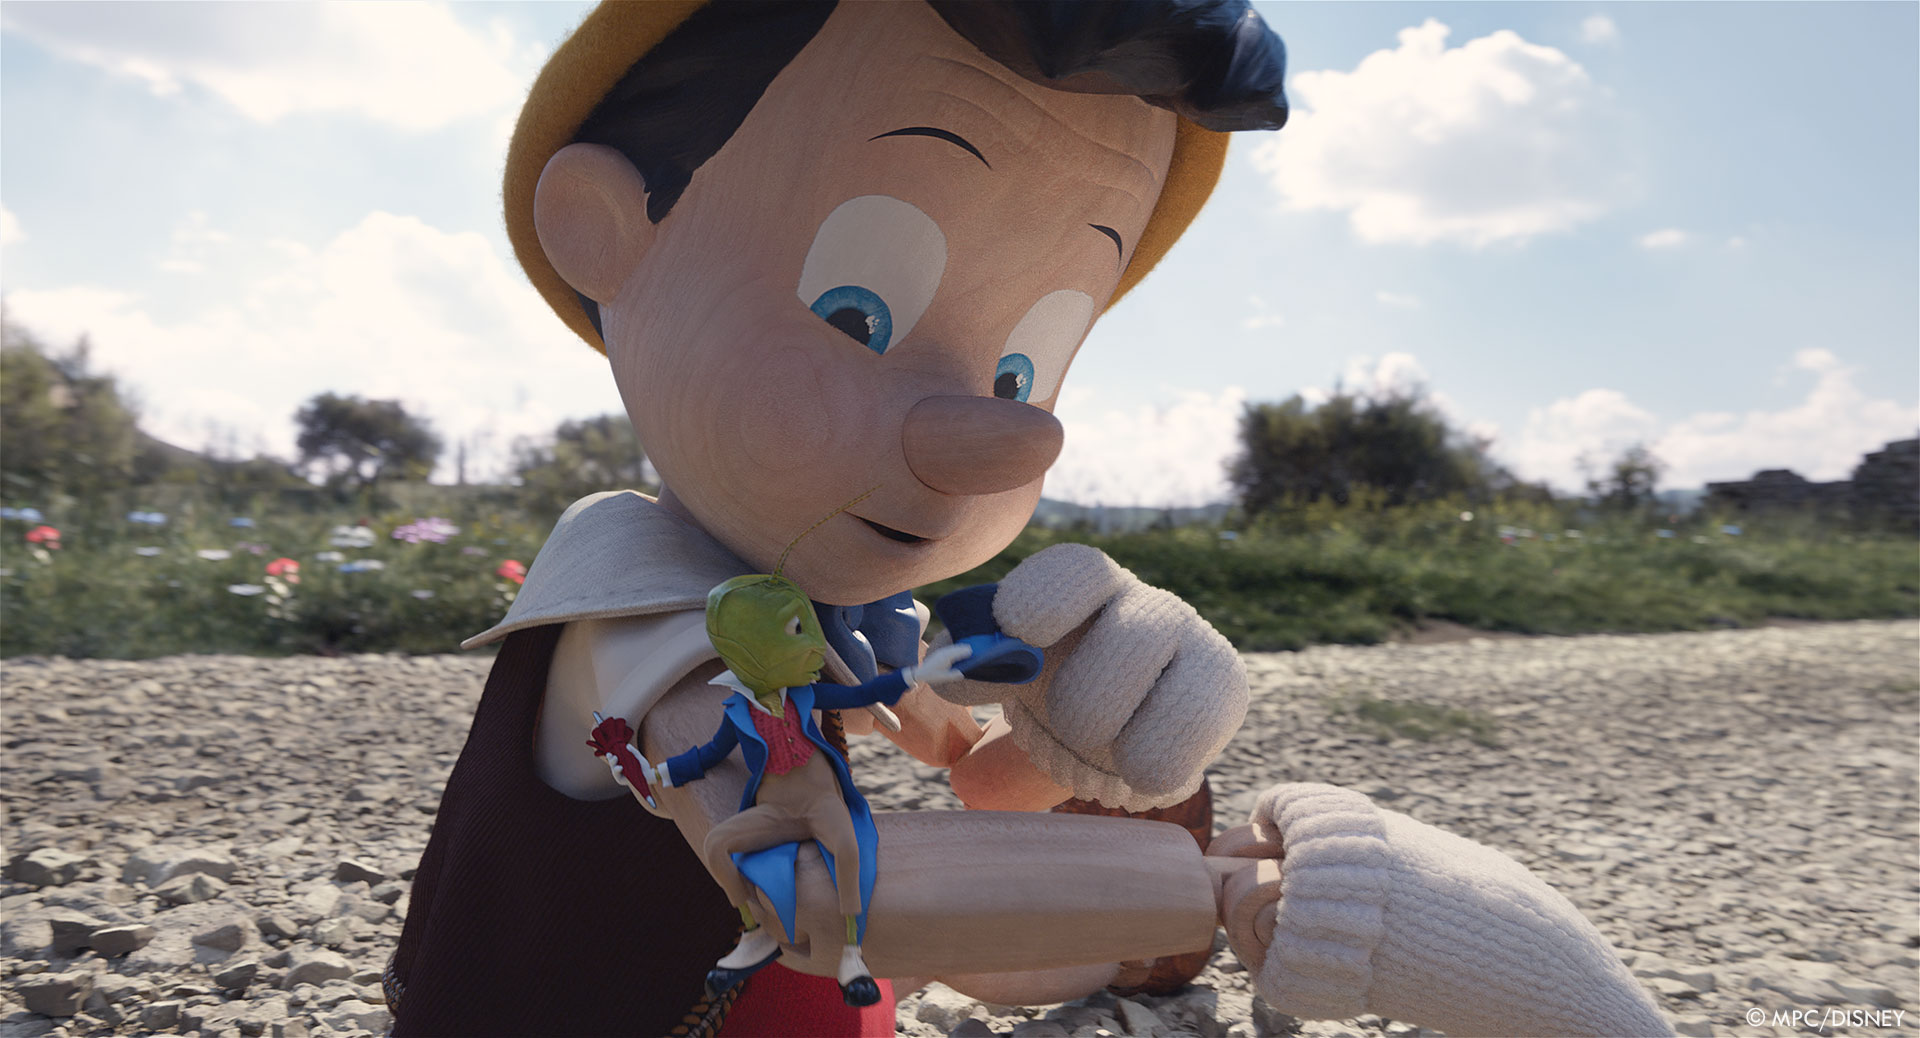 Pinocchio, Movie, Disney, Plot, Characters, & Facts